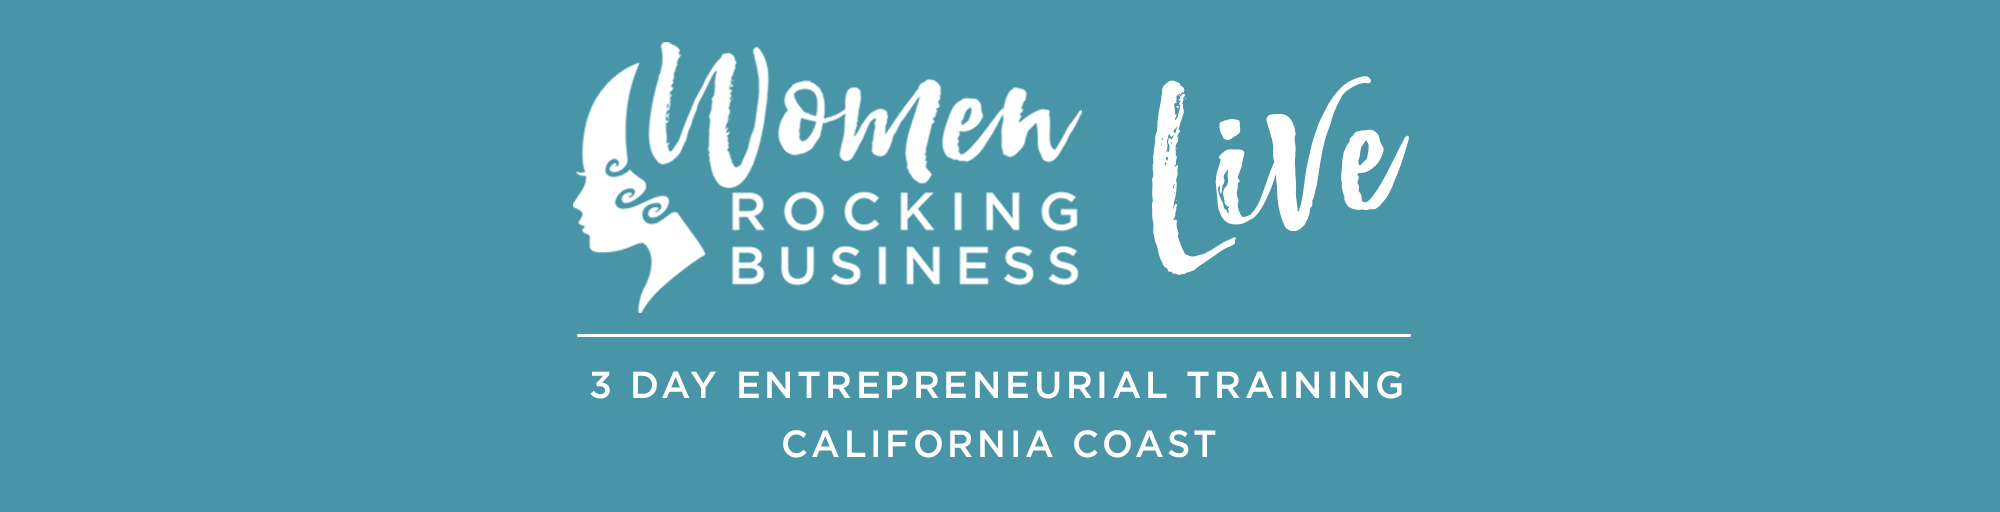 Women Rocking Business Live